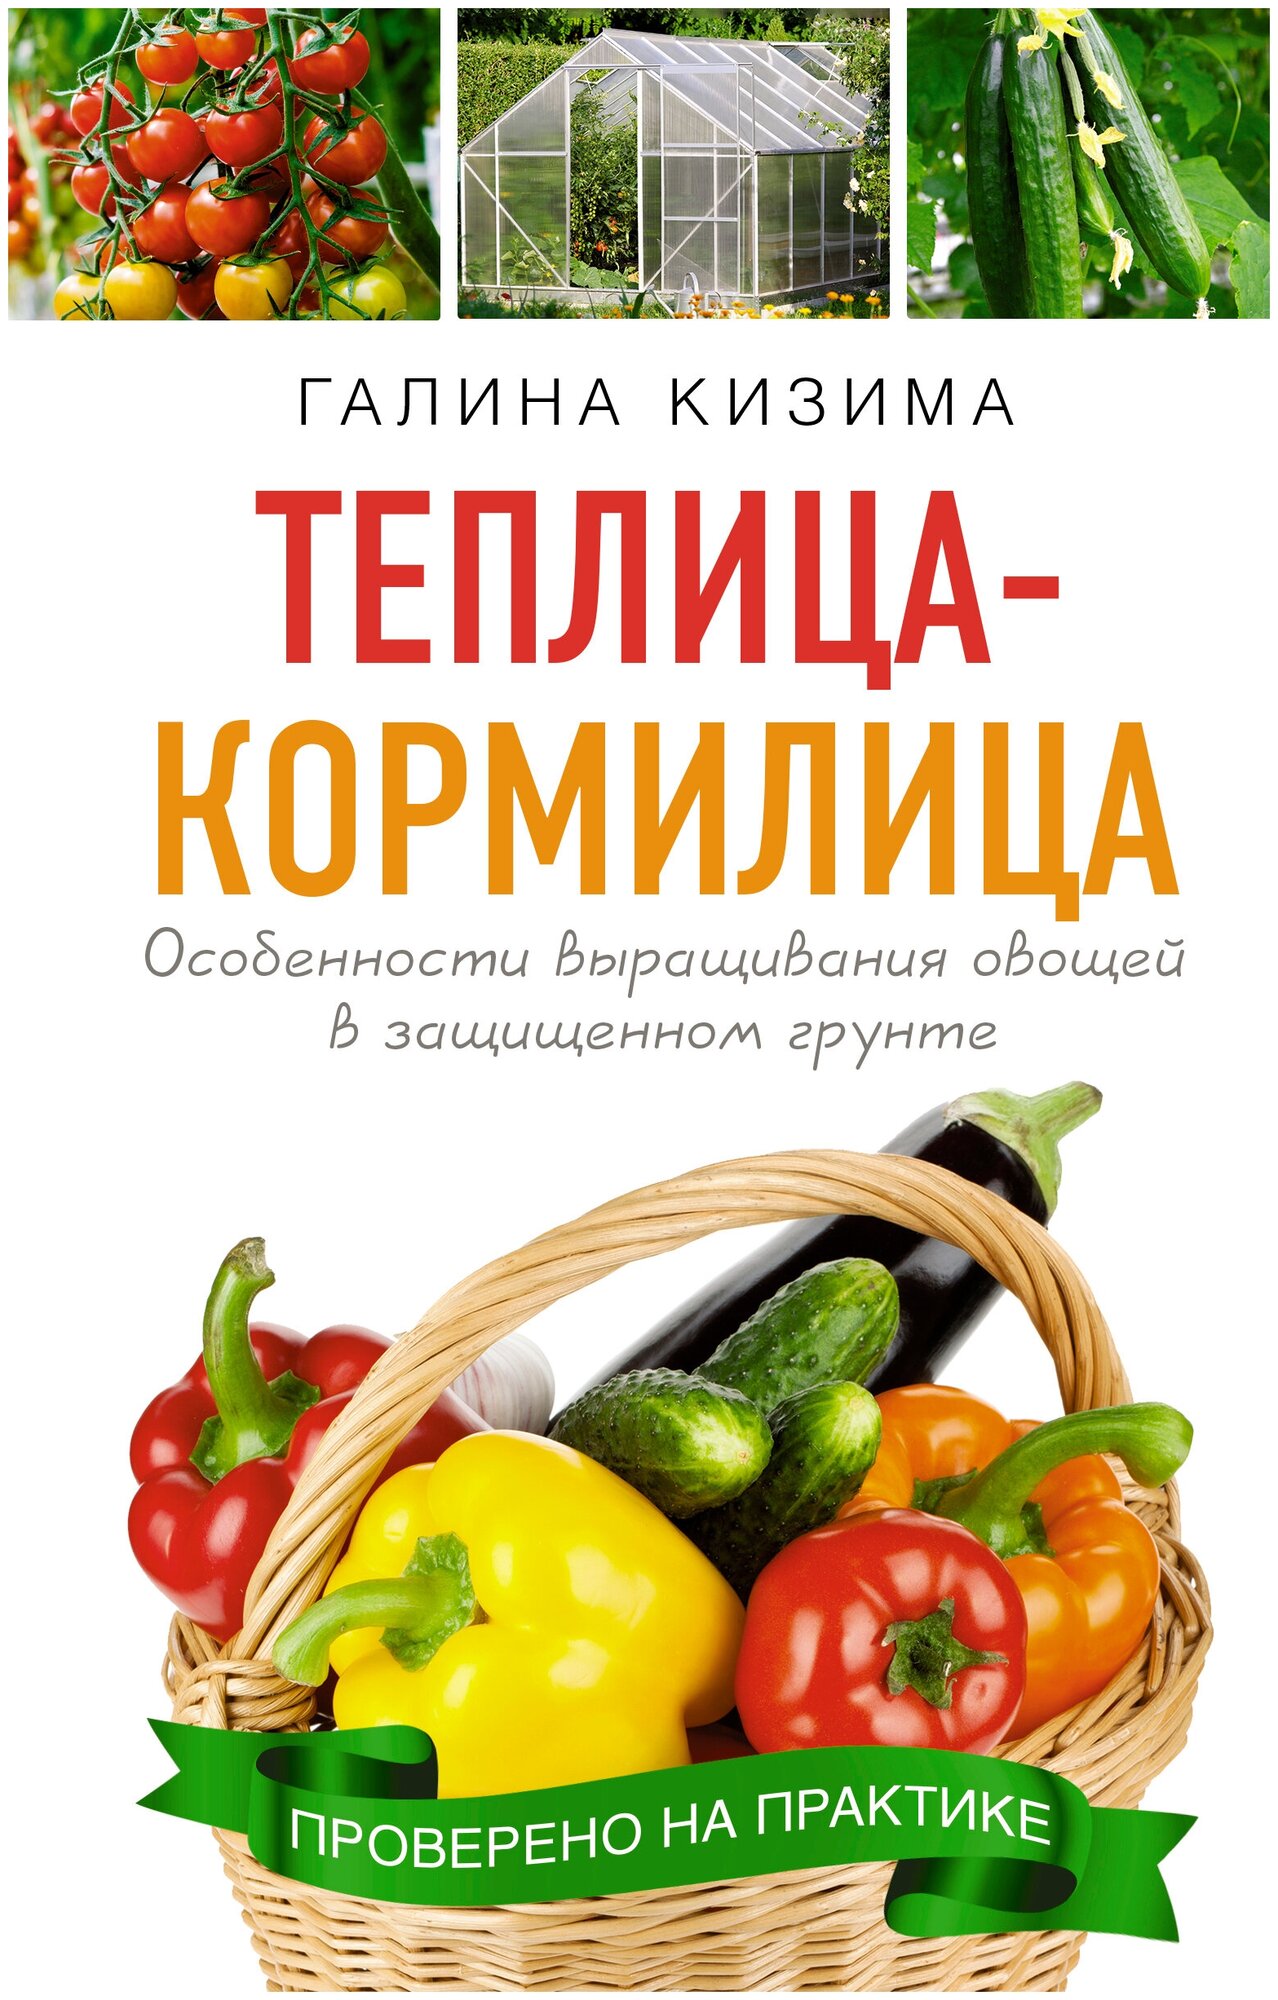 Все о тепличной жизни любимых овощей Теплица кормилица Книга Кизима Галина12+